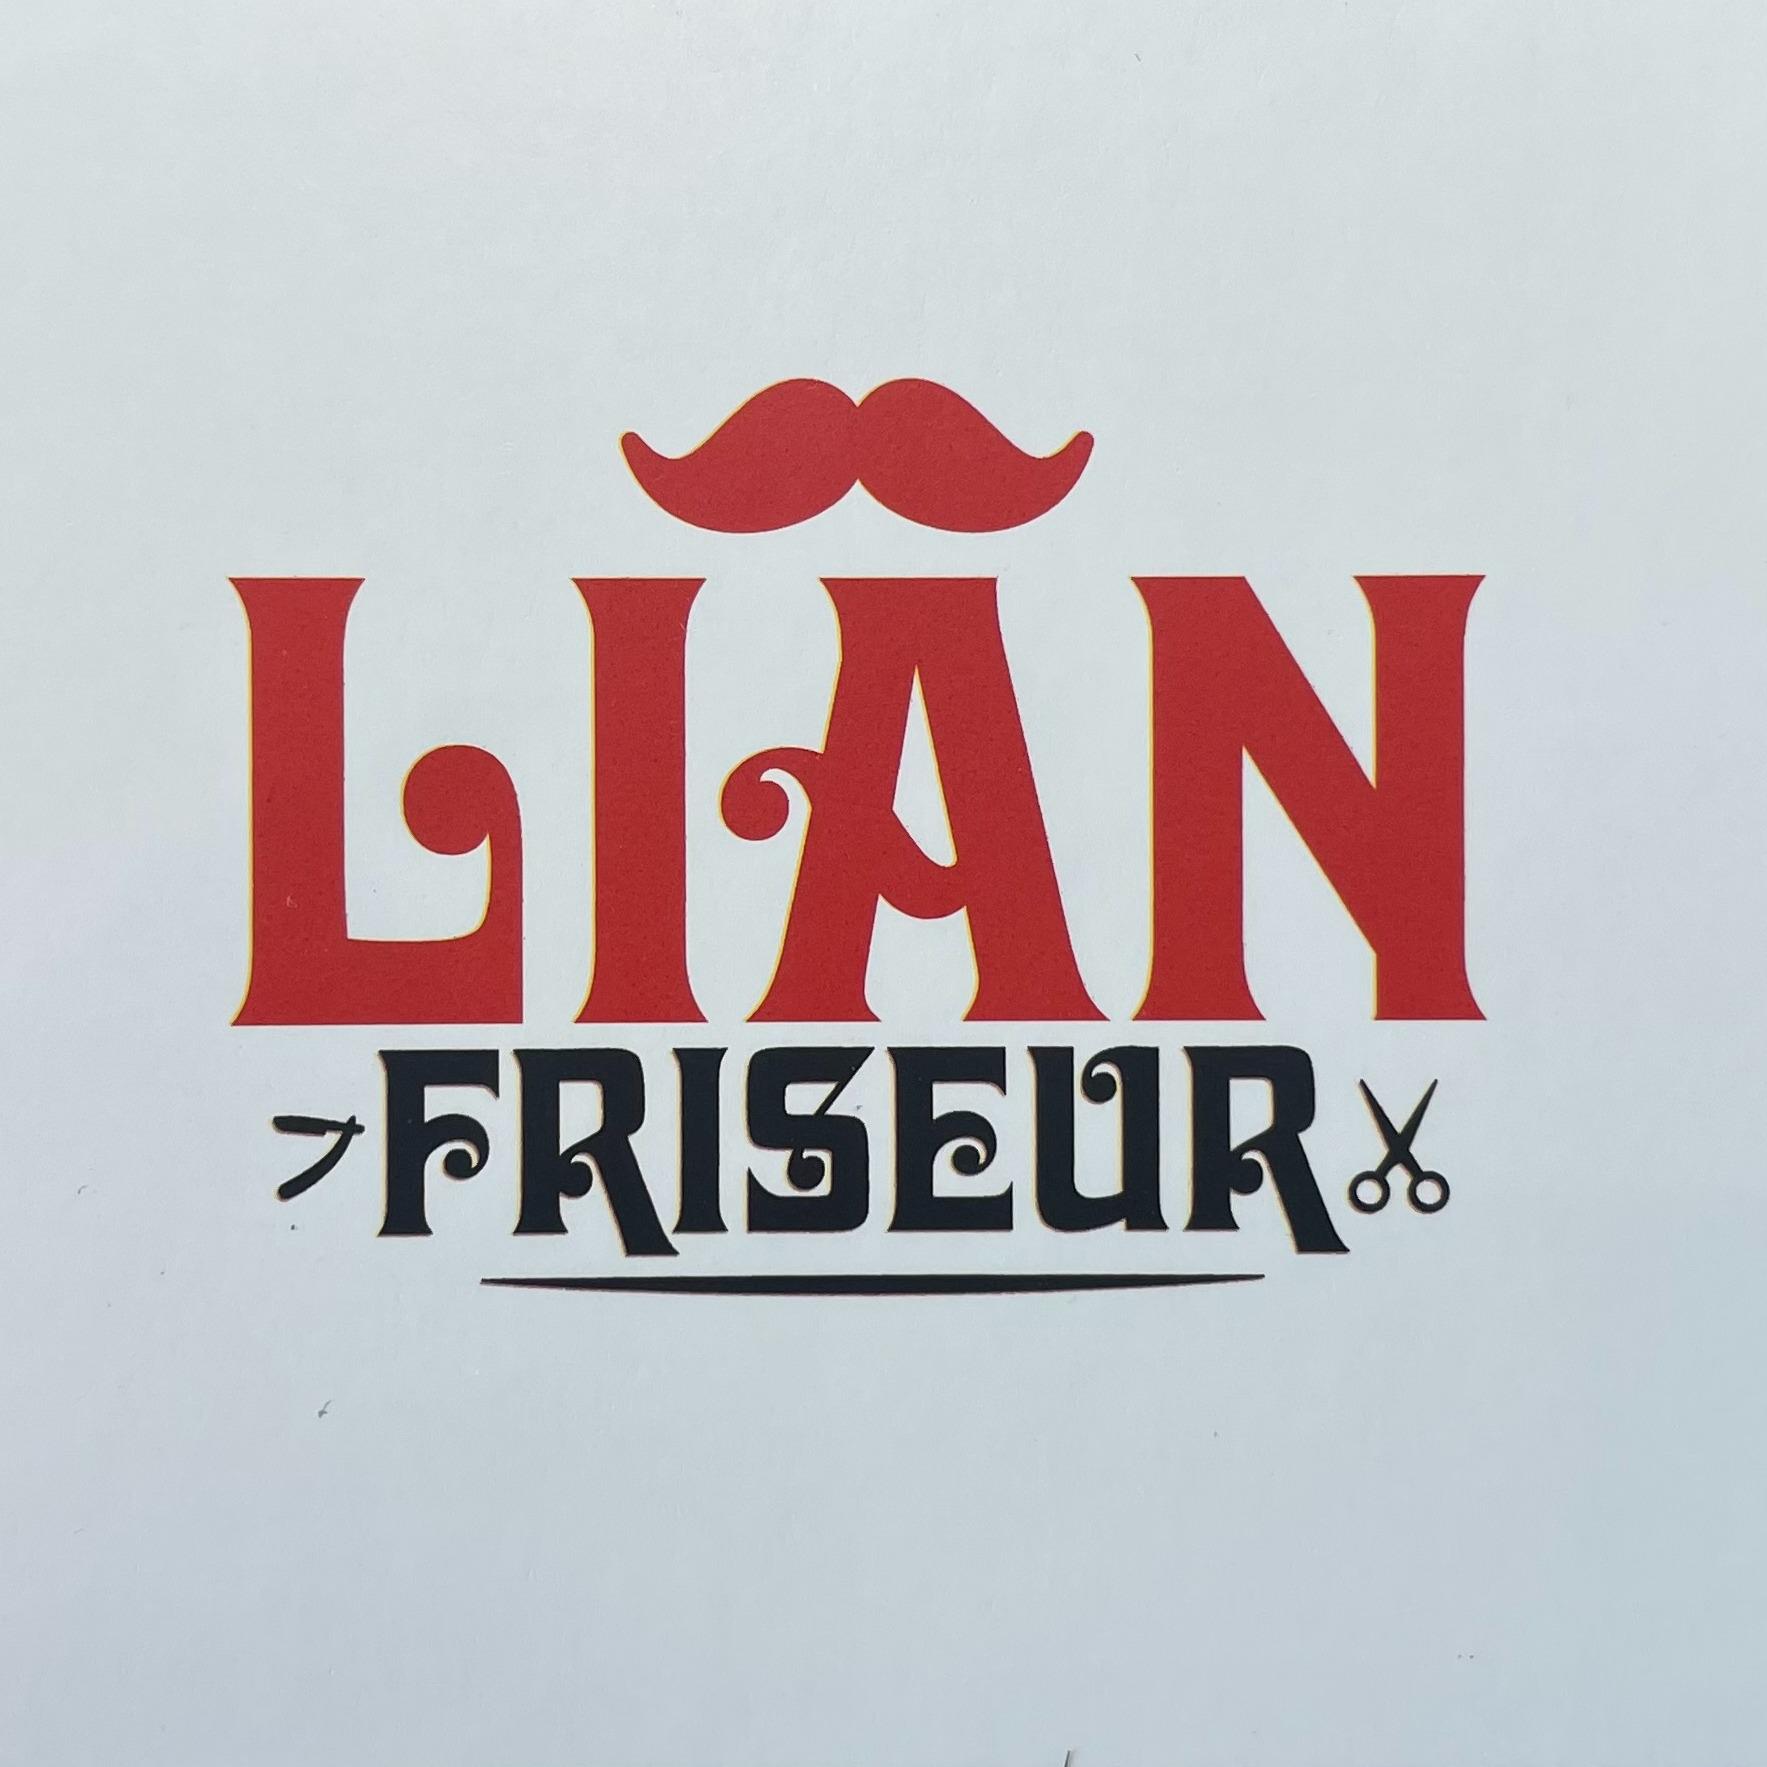 Logo von Lian Friseur